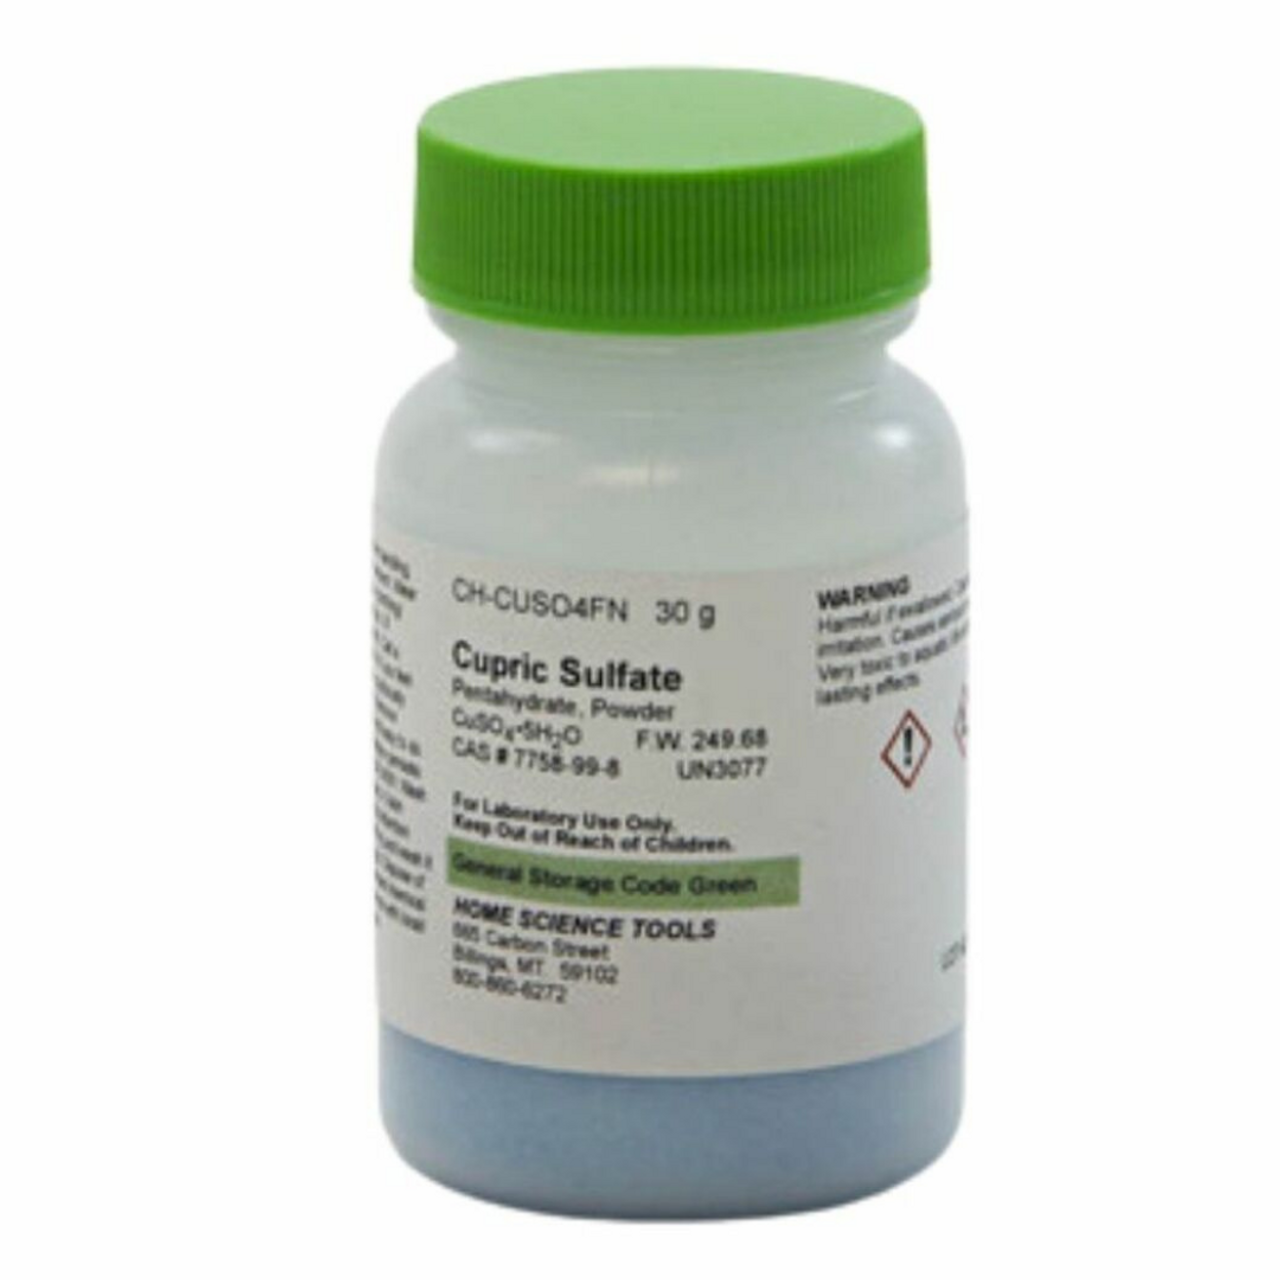 Cooper Sulfate de Magnésium Heptahydraté 30g